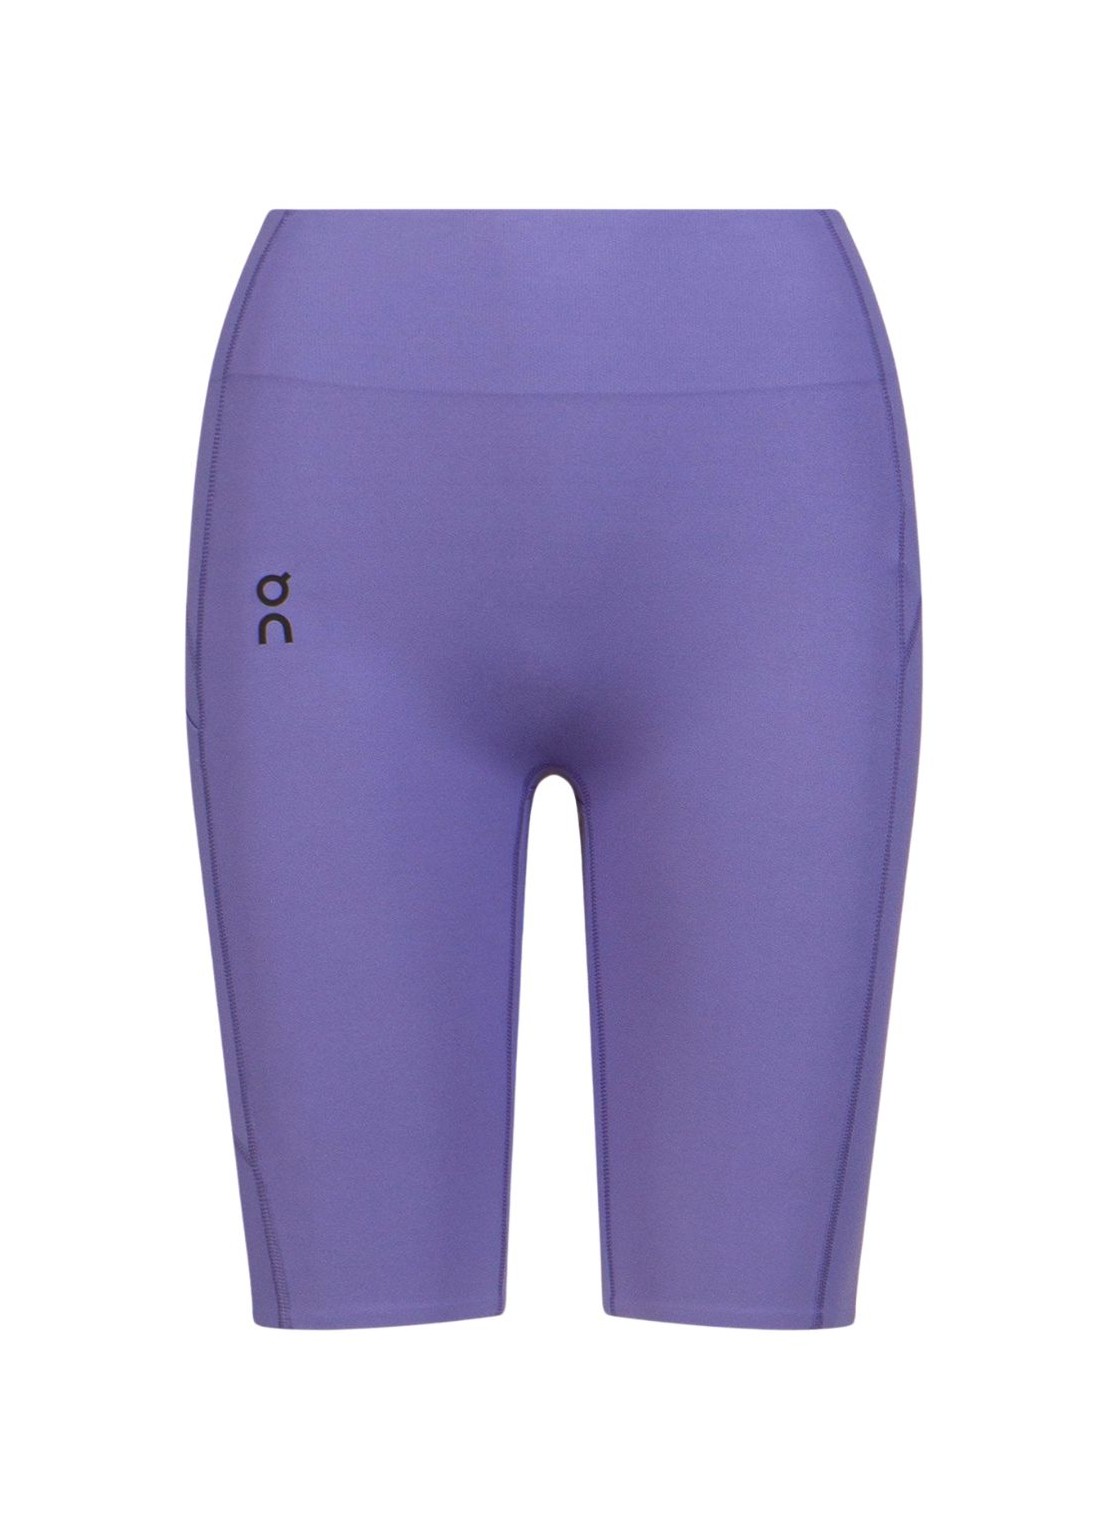 Pantalon corto on running short pant womanmovement tights short - 1we11911938 blueberry talla violet